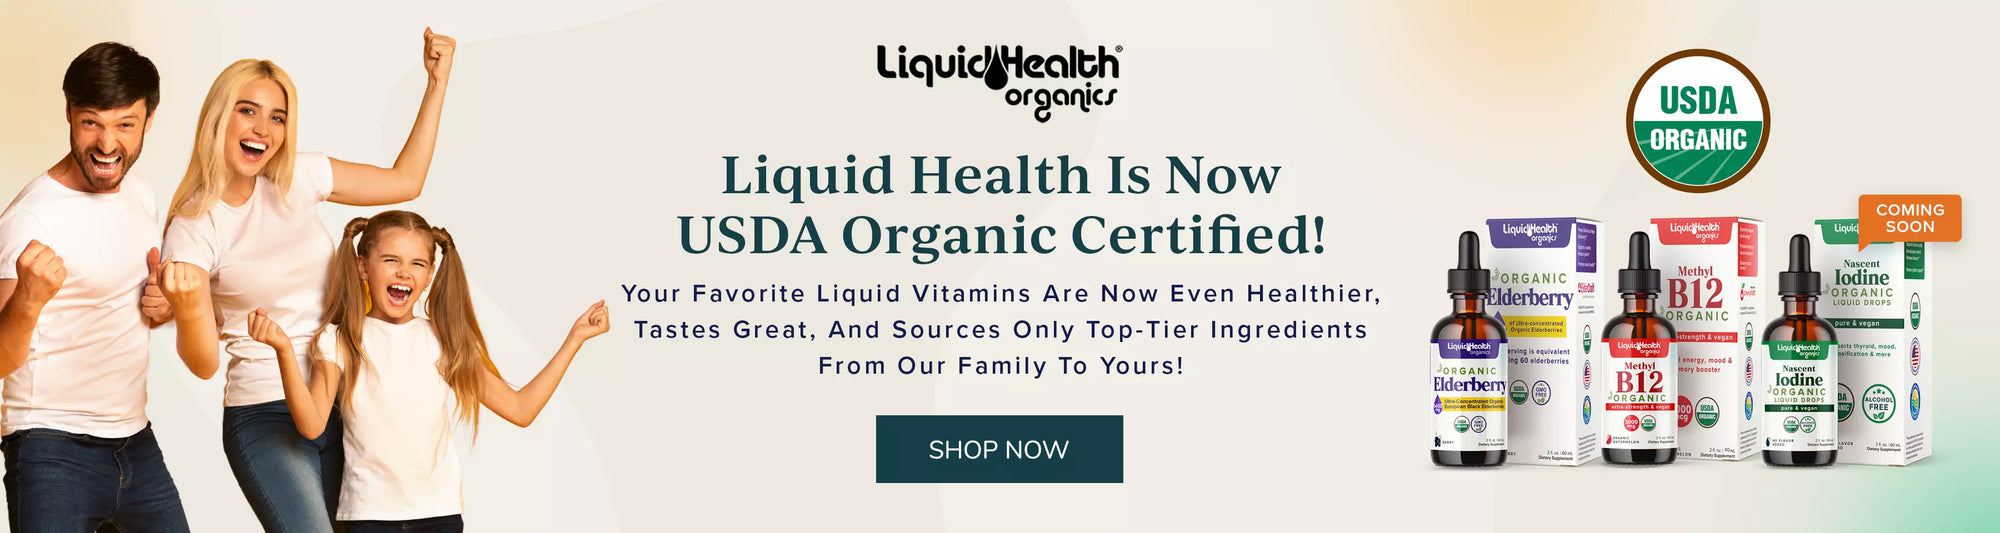 Liquid Health New Site Image Desktop